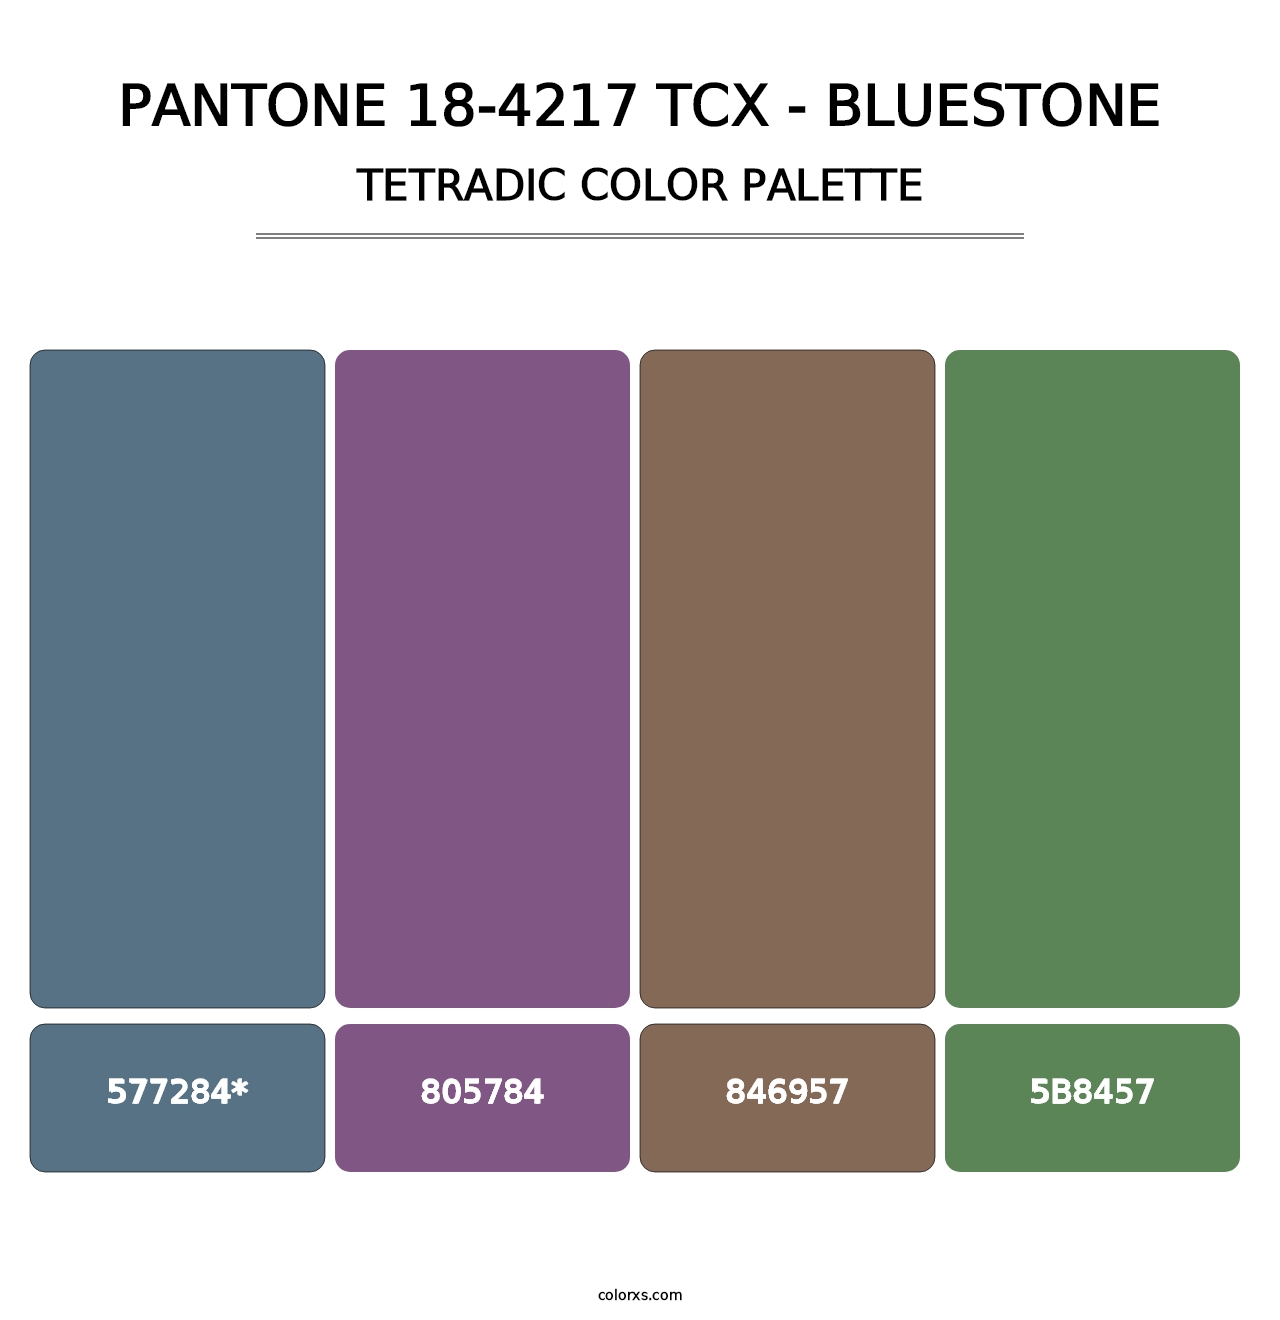 PANTONE 18-4217 TCX - Bluestone - Tetradic Color Palette